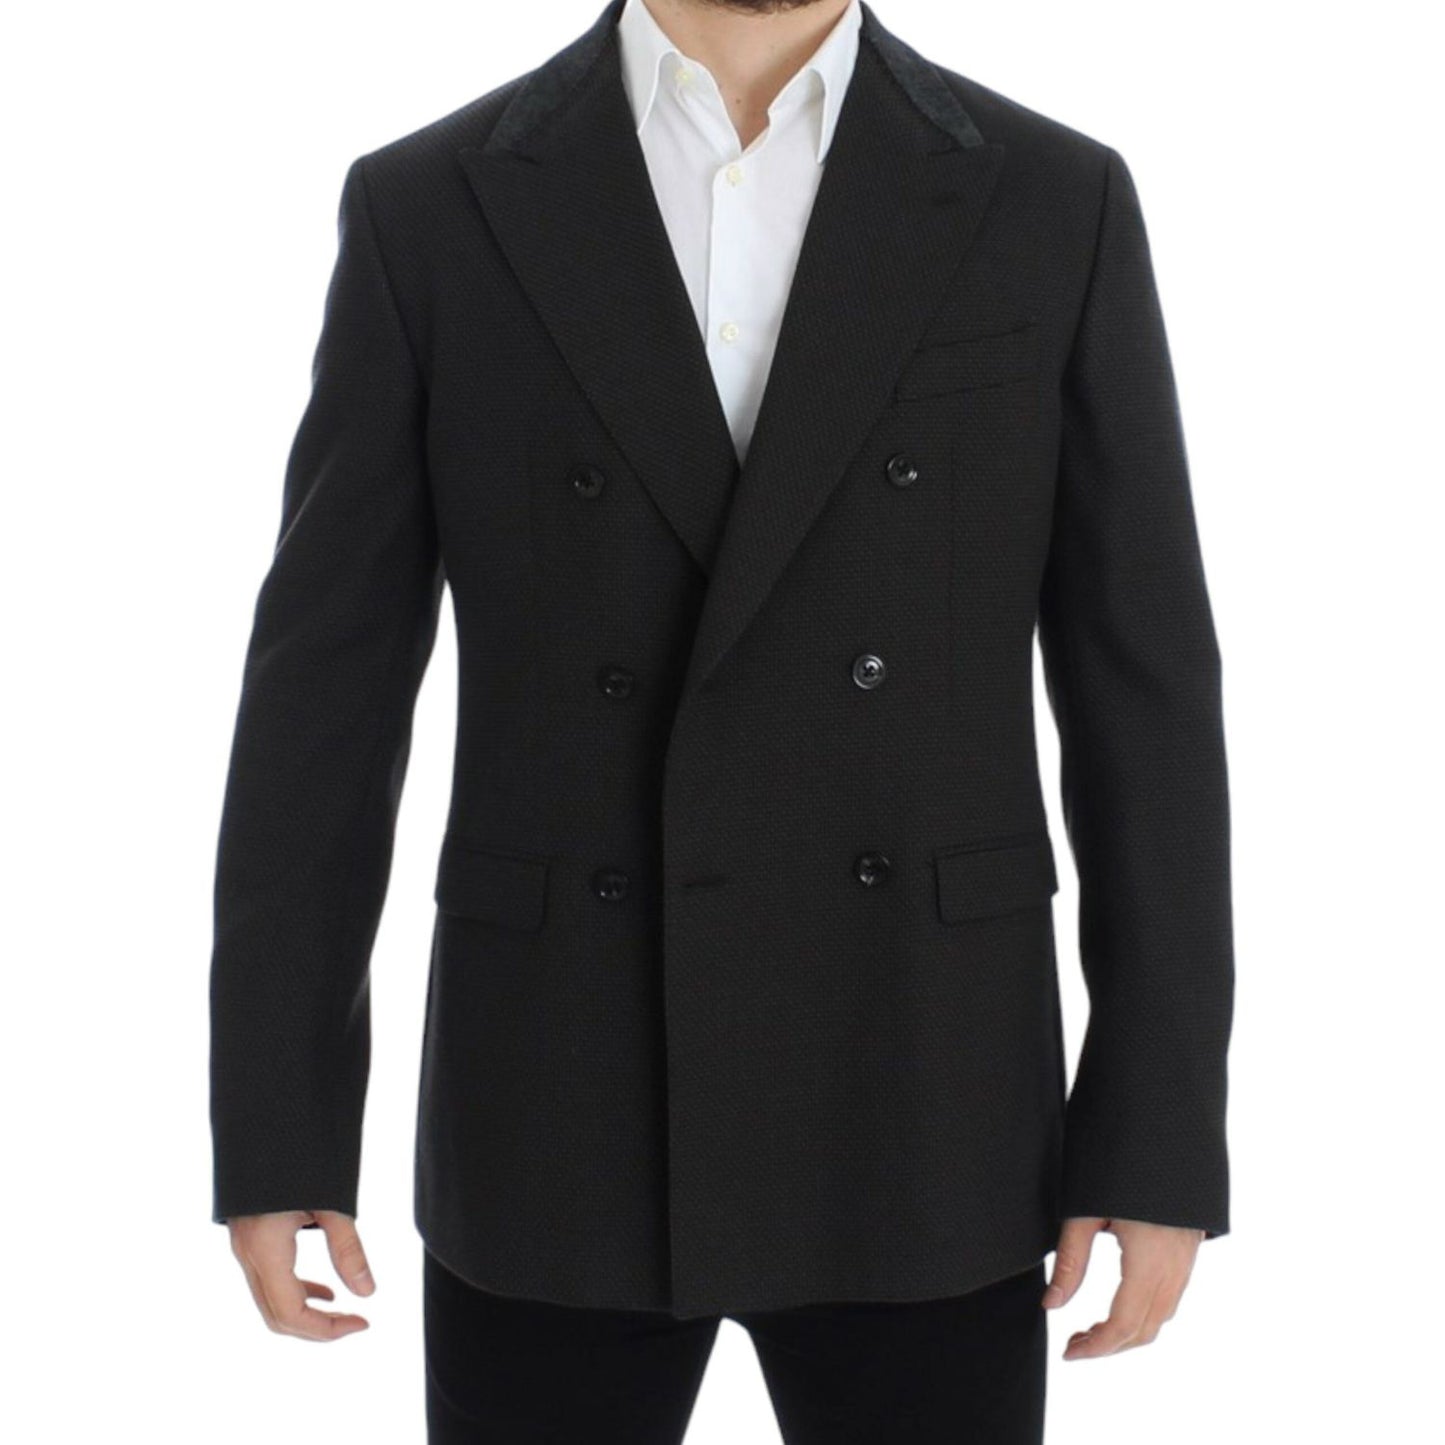 Dolce & Gabbana Elegant Slim Fit Double Breasted Blazer brown-wool-slim-fit-blazer 13251-brown-wool-slim-fit-blazer-3-5-scaled-1e0022dd-3a0.jpg